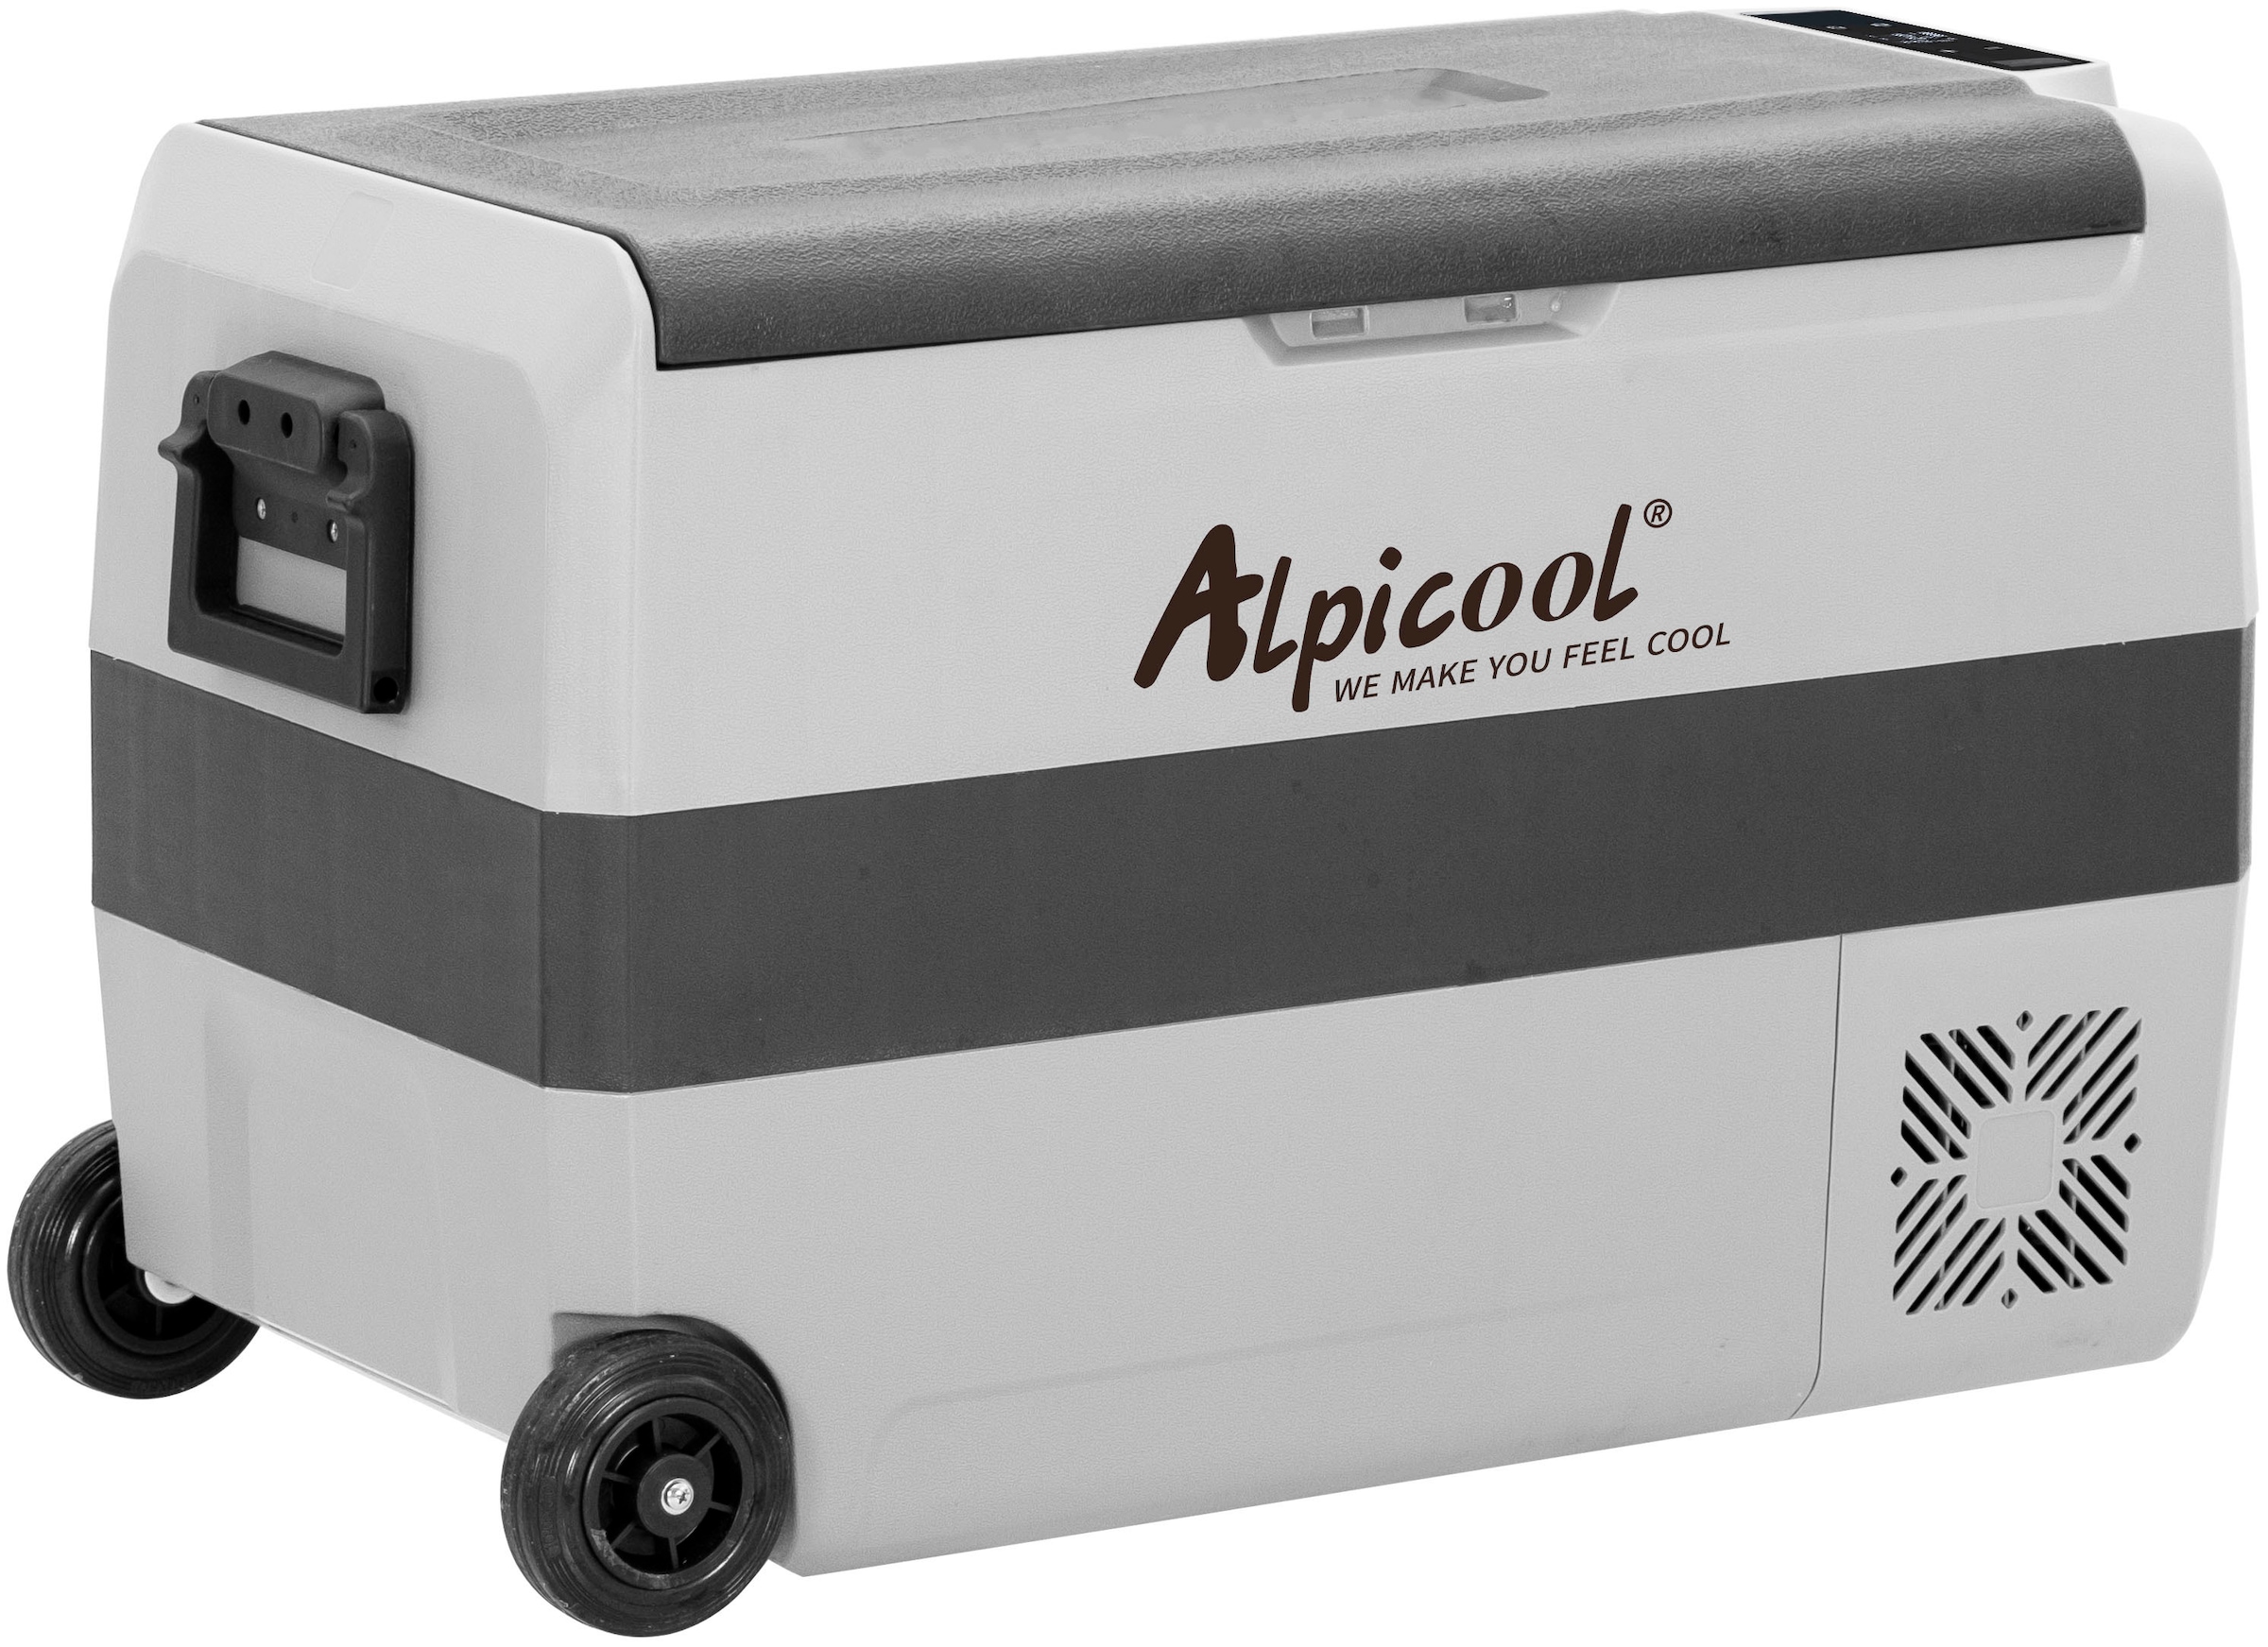 Alpicool Kompressor Kühlbox ET-Serie, 349,99 €